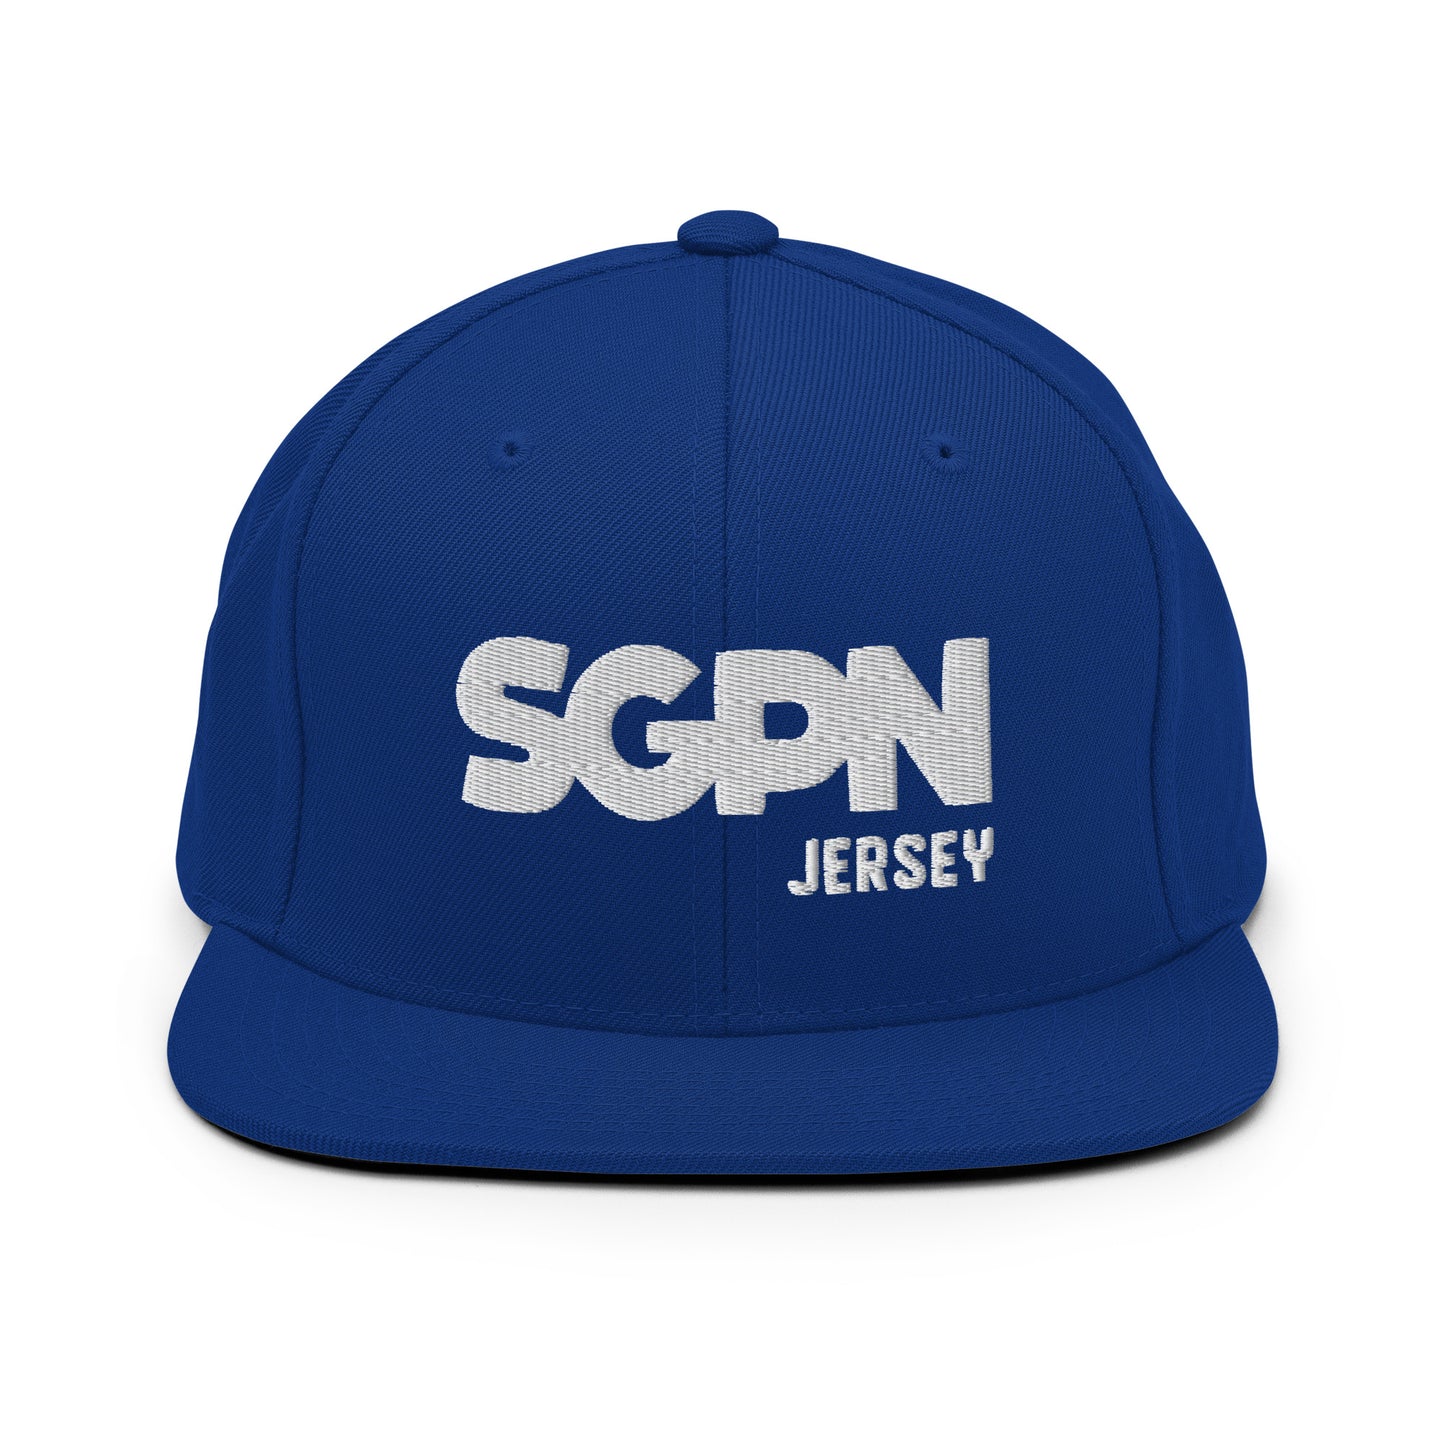 SGPN - Jersey edition - Snapback Hat